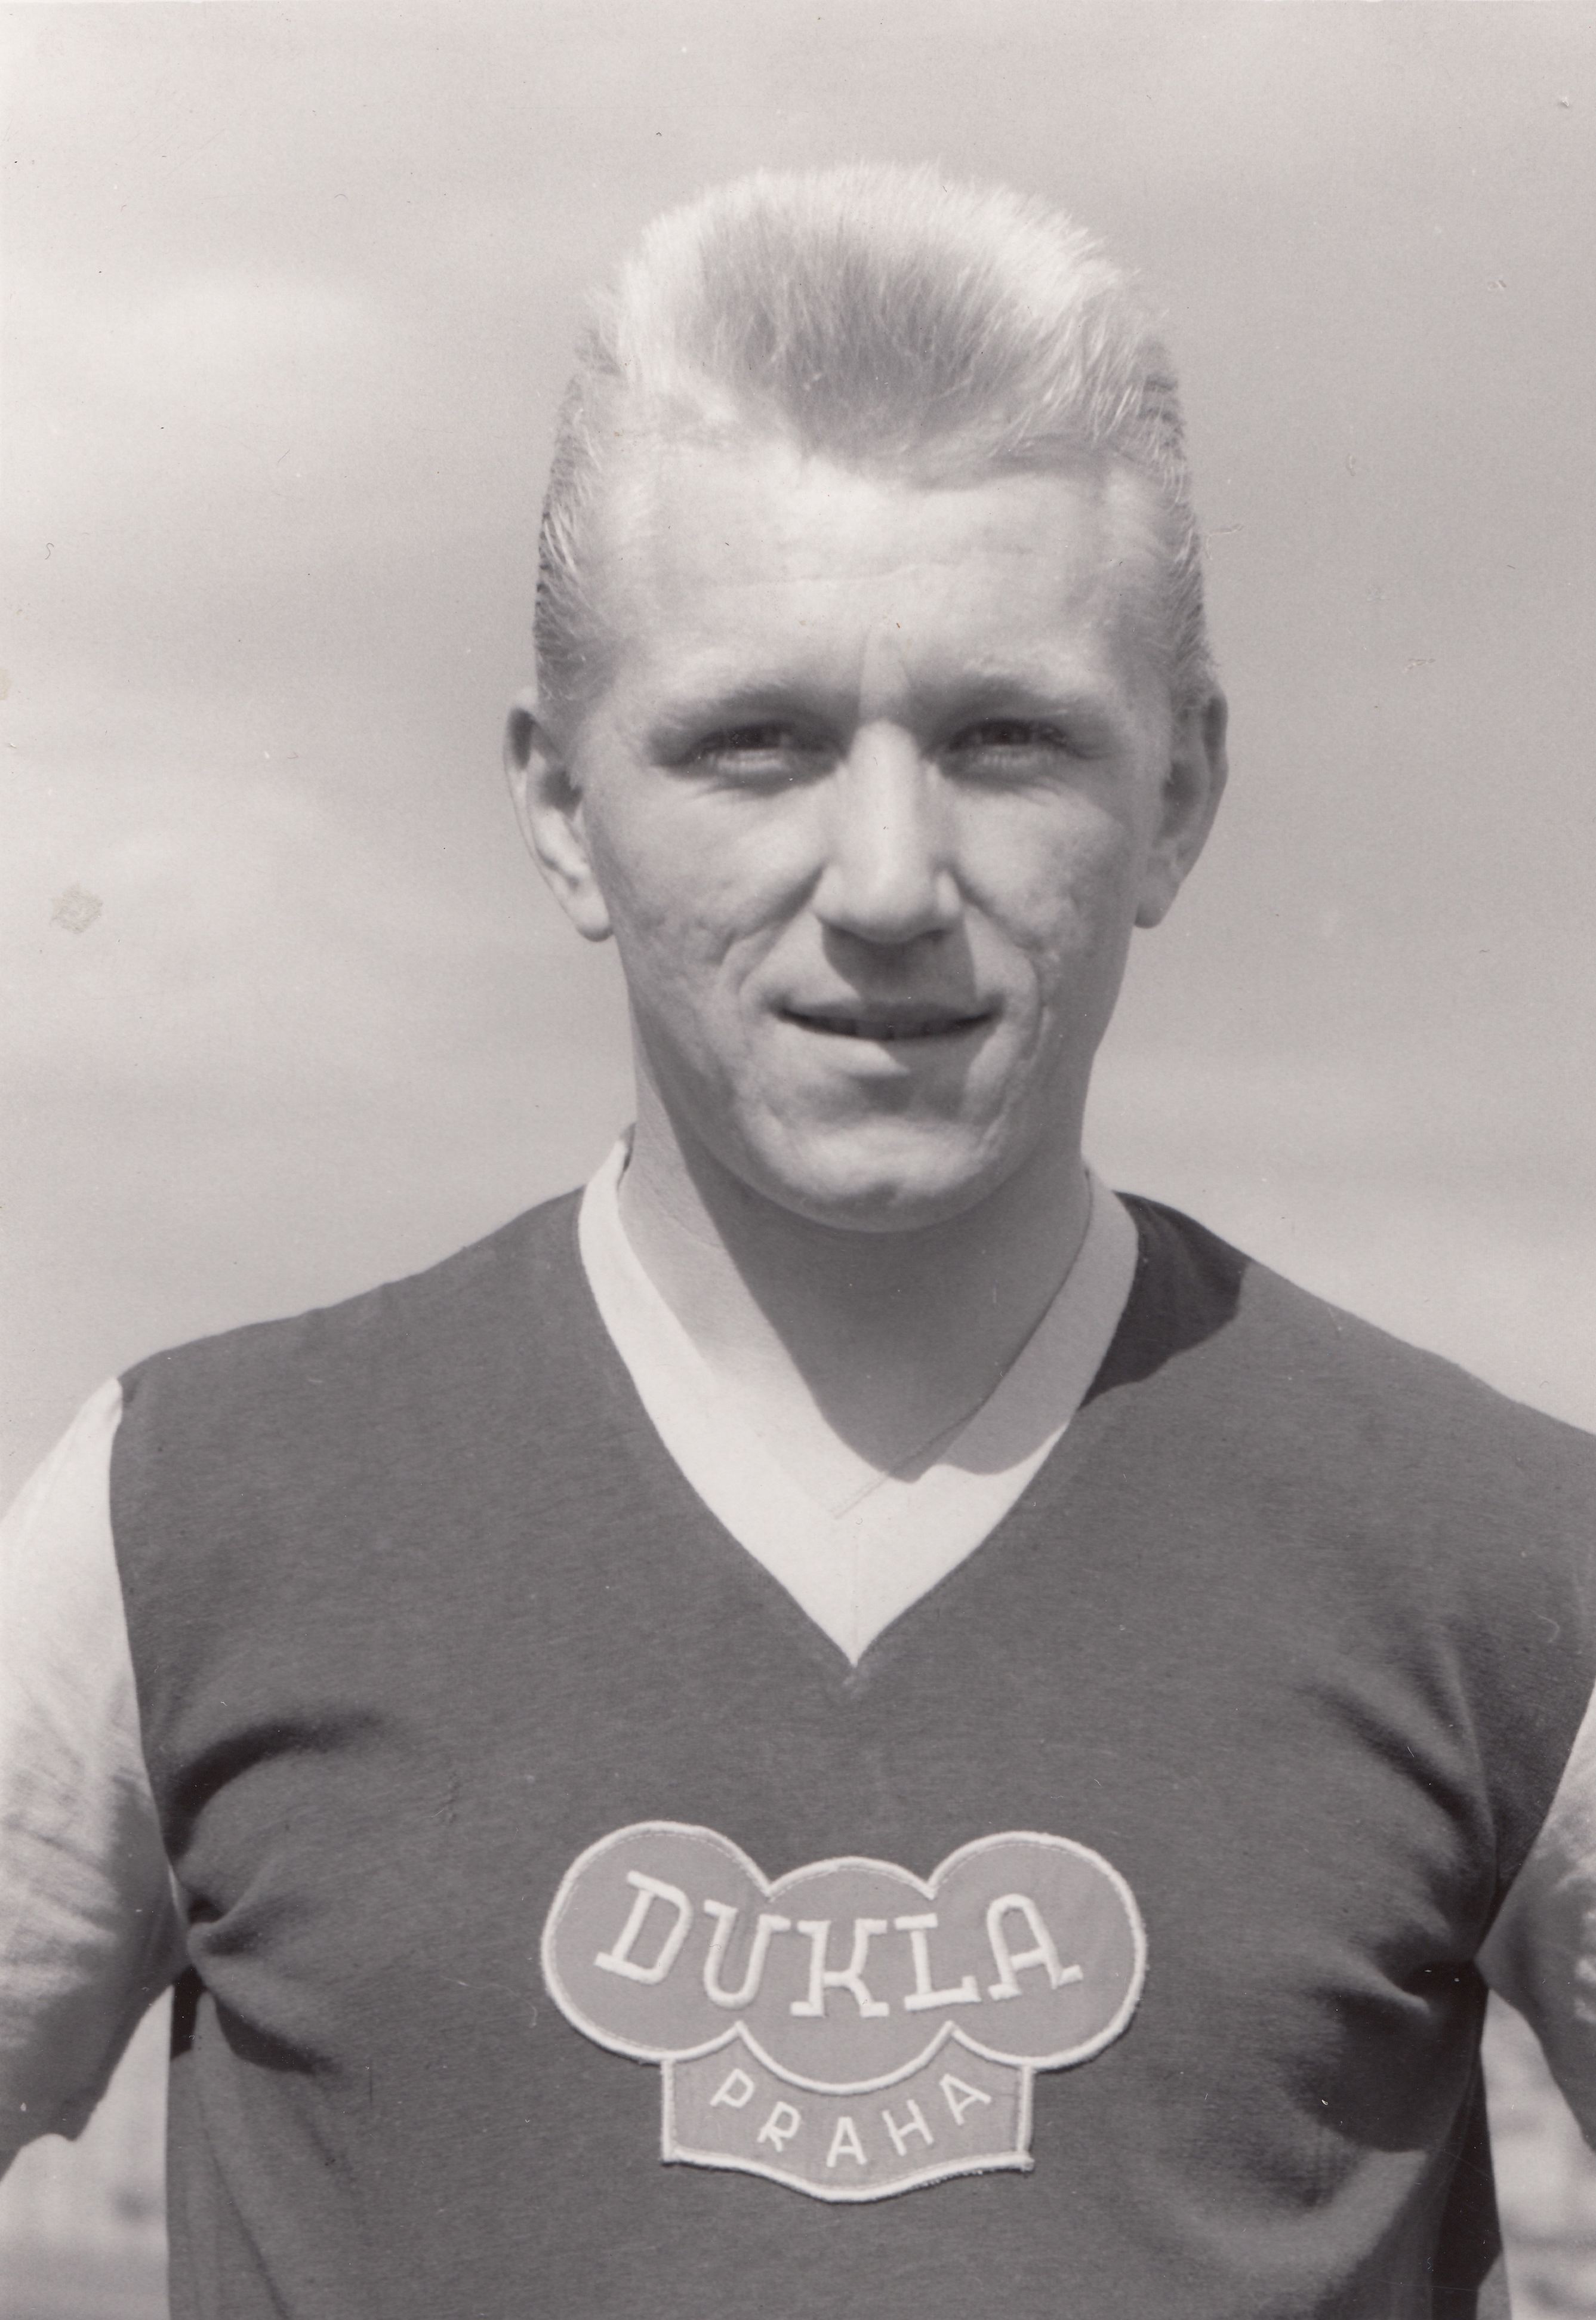 The football player of the Dukla Prague club, 1961/62